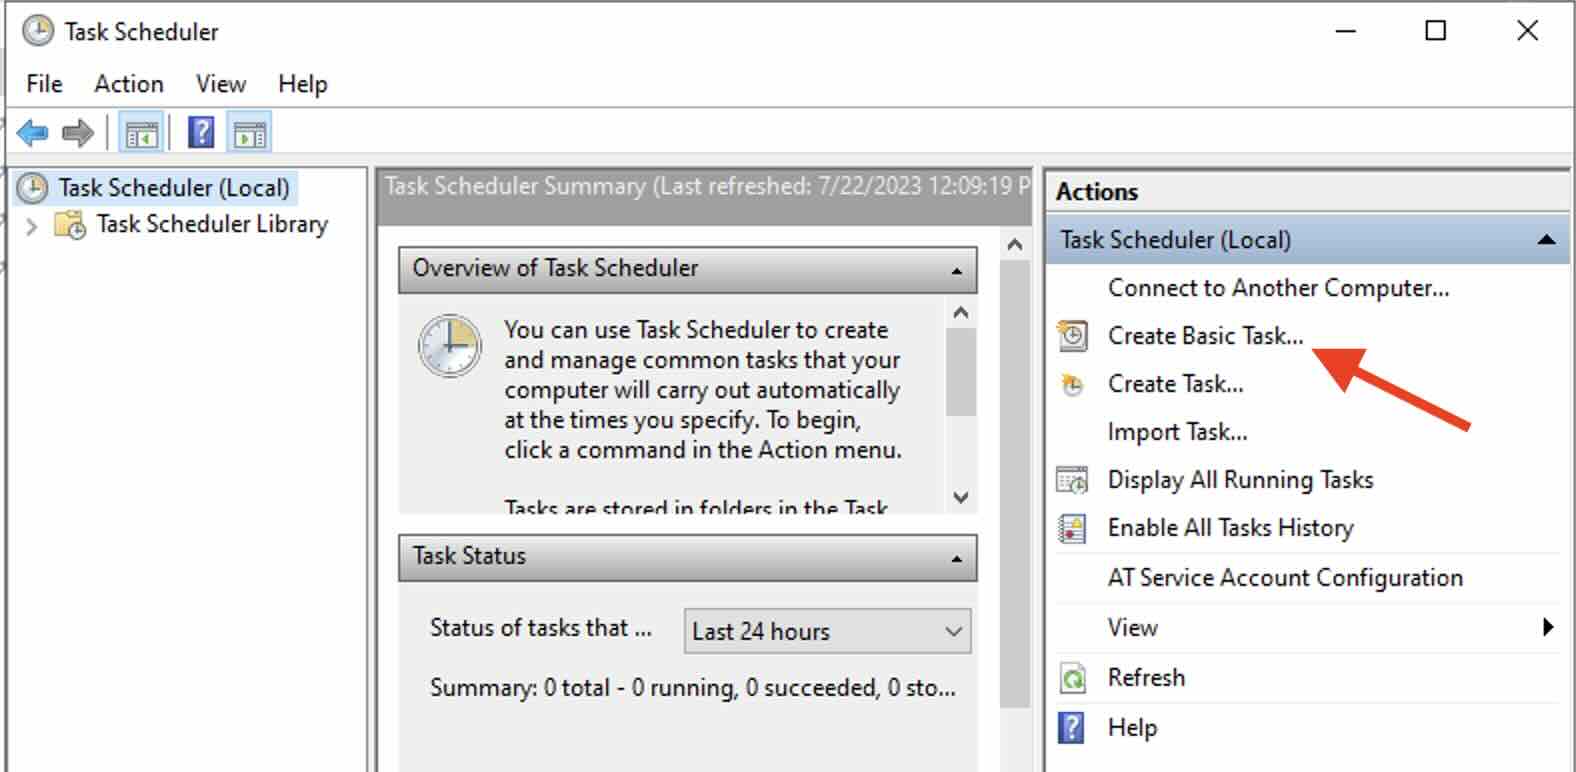 Chick on Create Basic Task under Task Scheduler Local